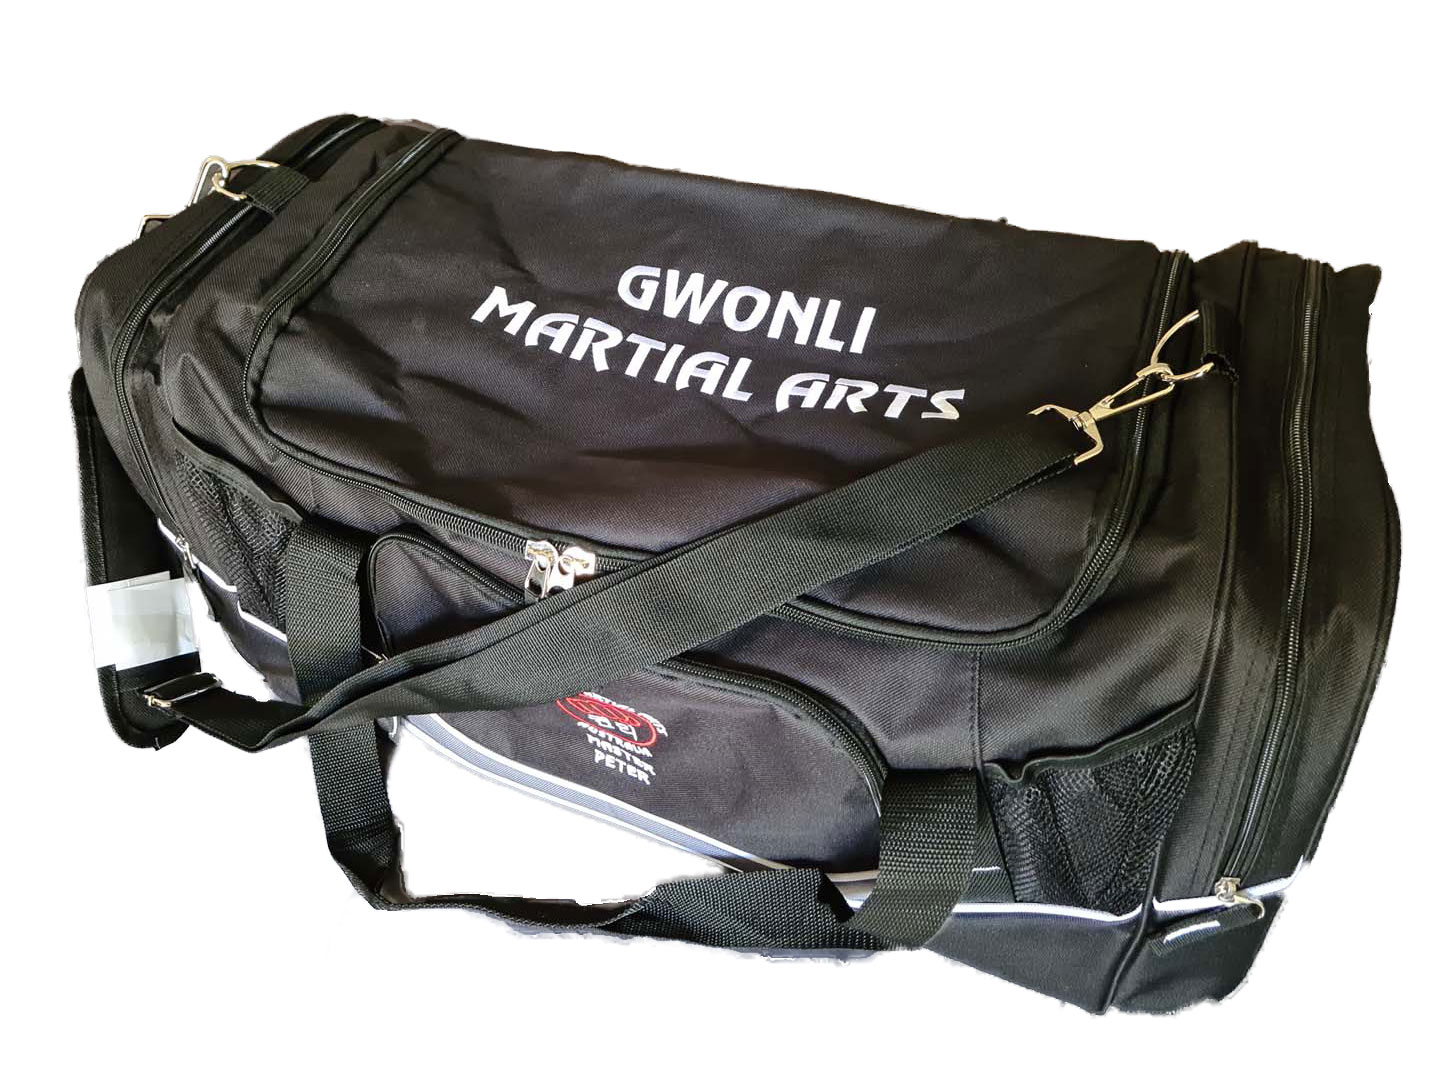 Official Gwonli Personlised Bag